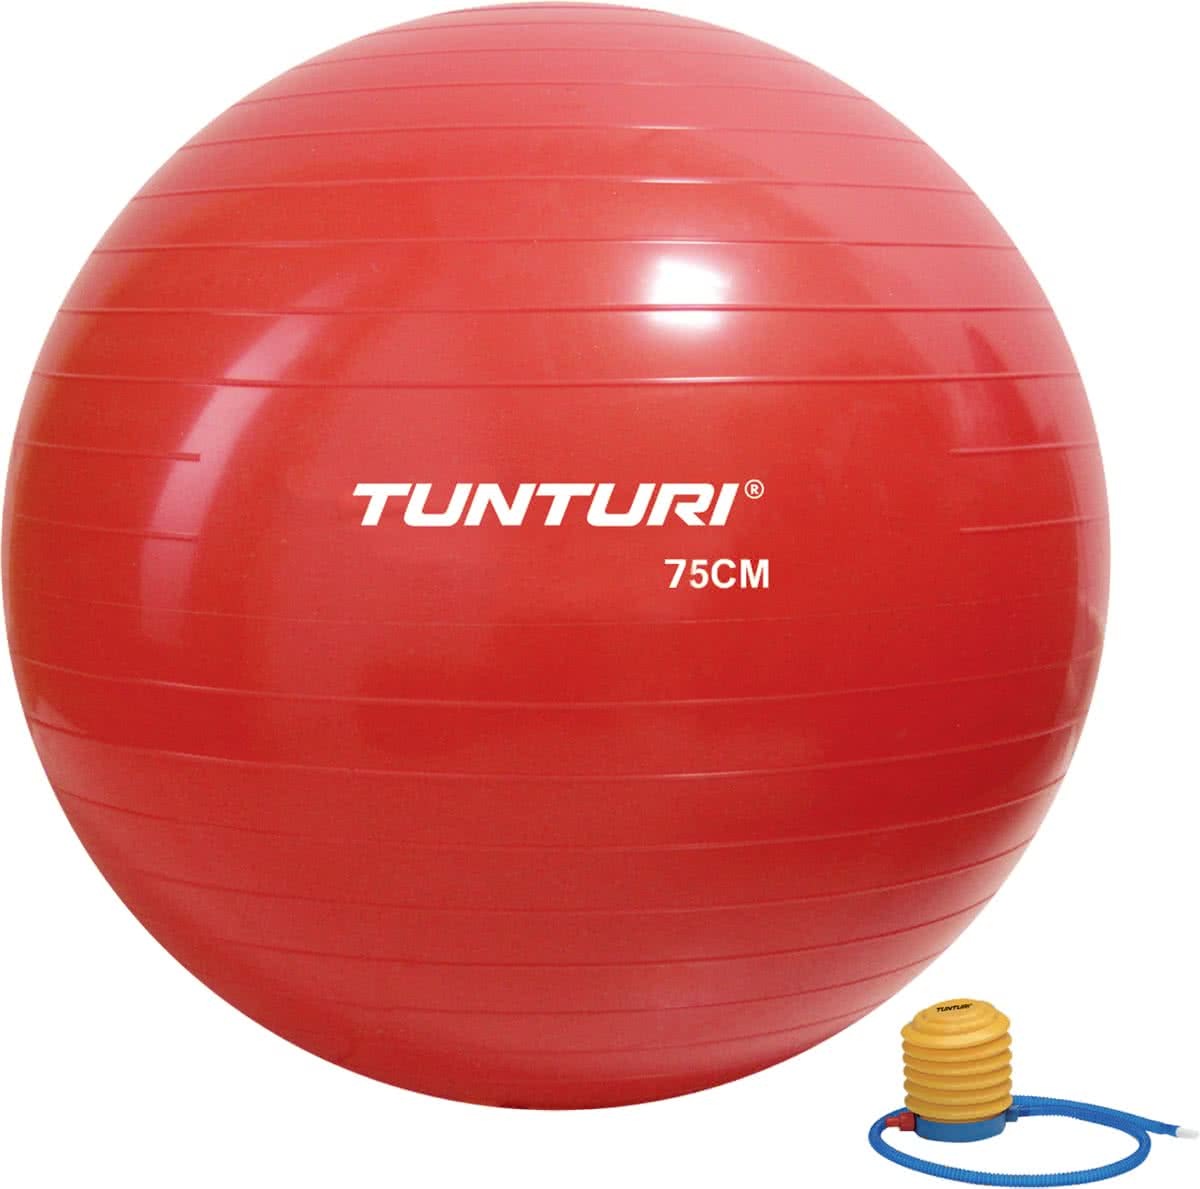 Tunturi Gymball 75cm - Rood